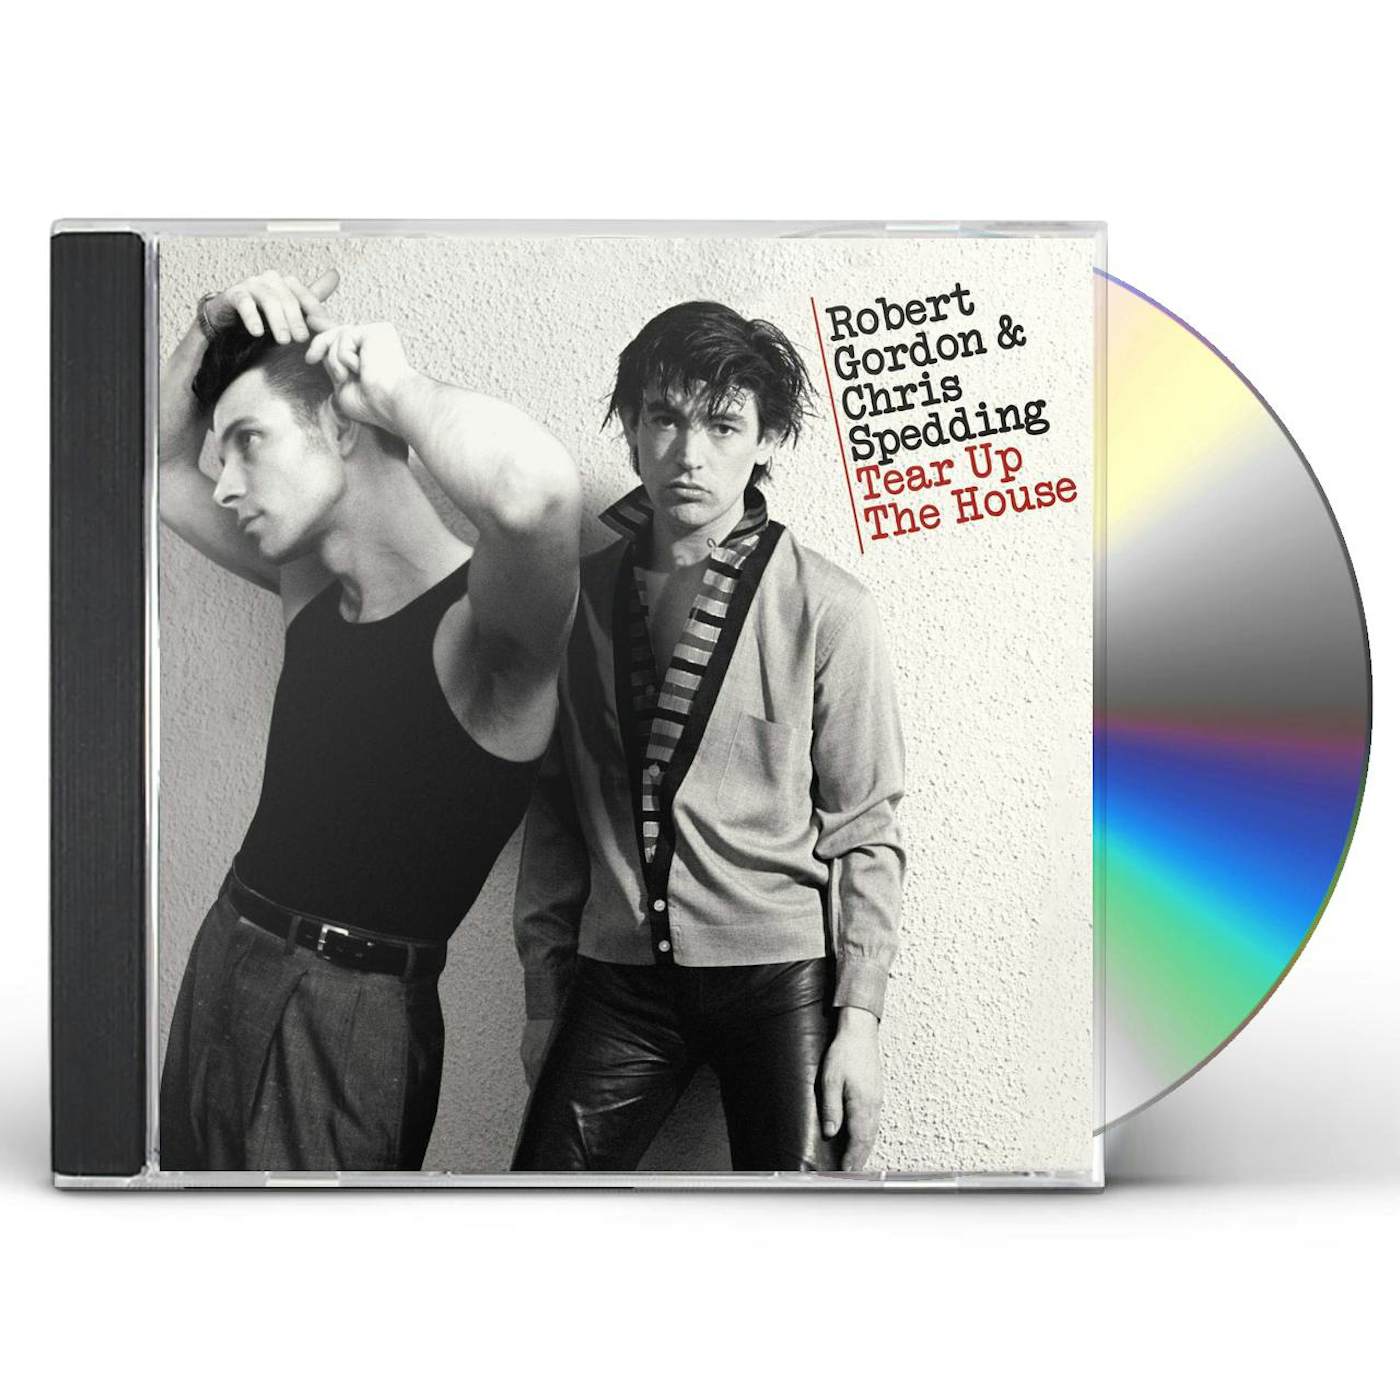 Robert Gordon & Chris Spedding TEAR UP THE HOUSE CD